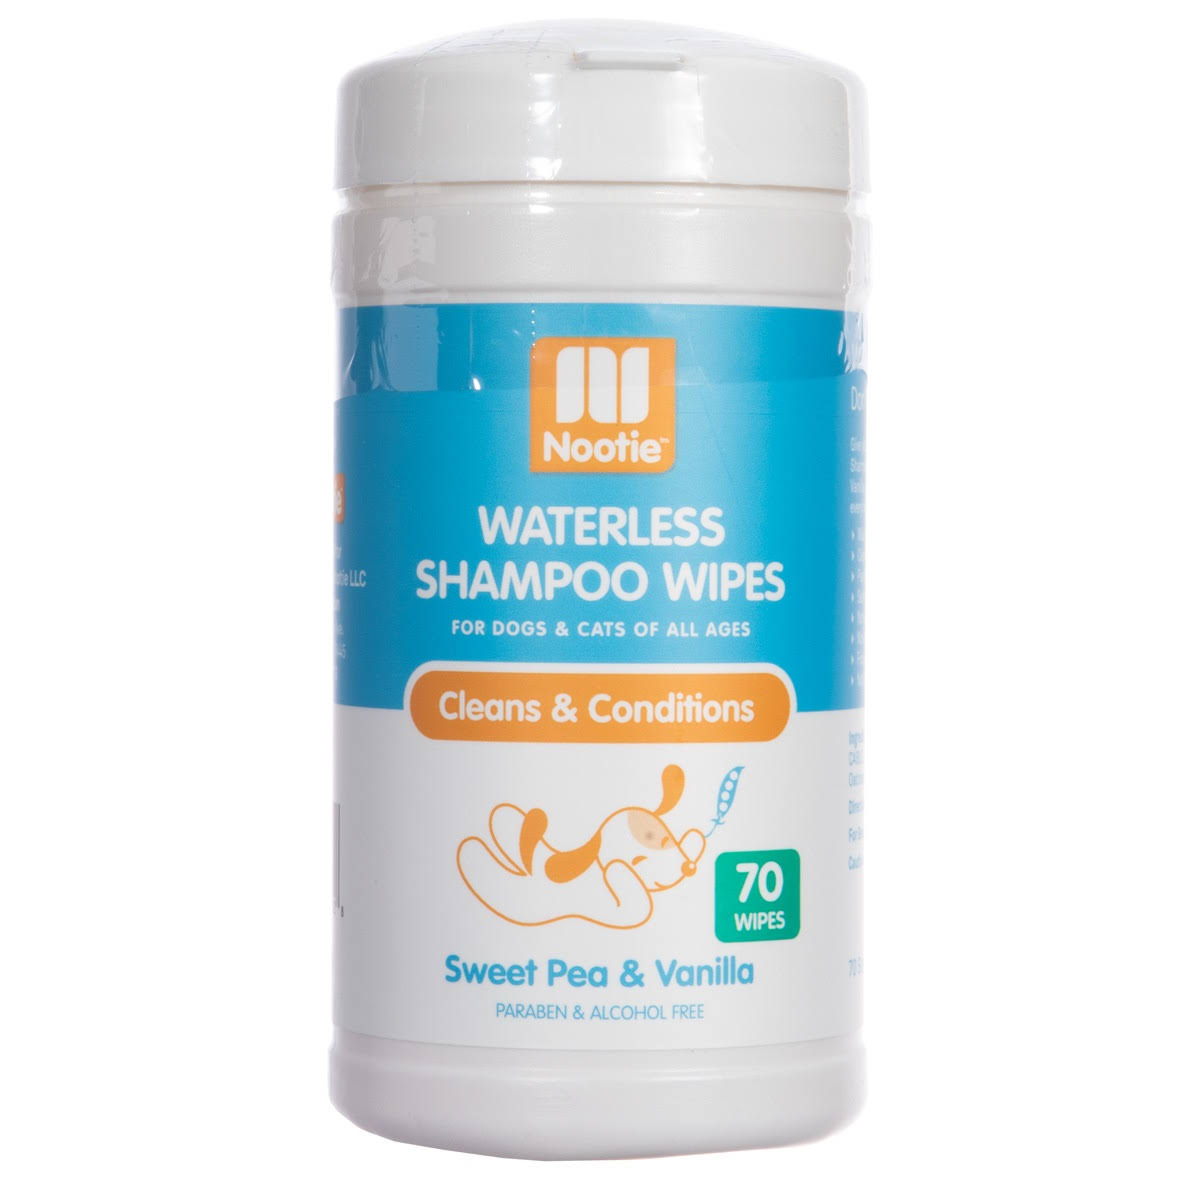 Nootie Waterless Shampoo Wipes, Sweet Pea & Vanilla, 70 Count